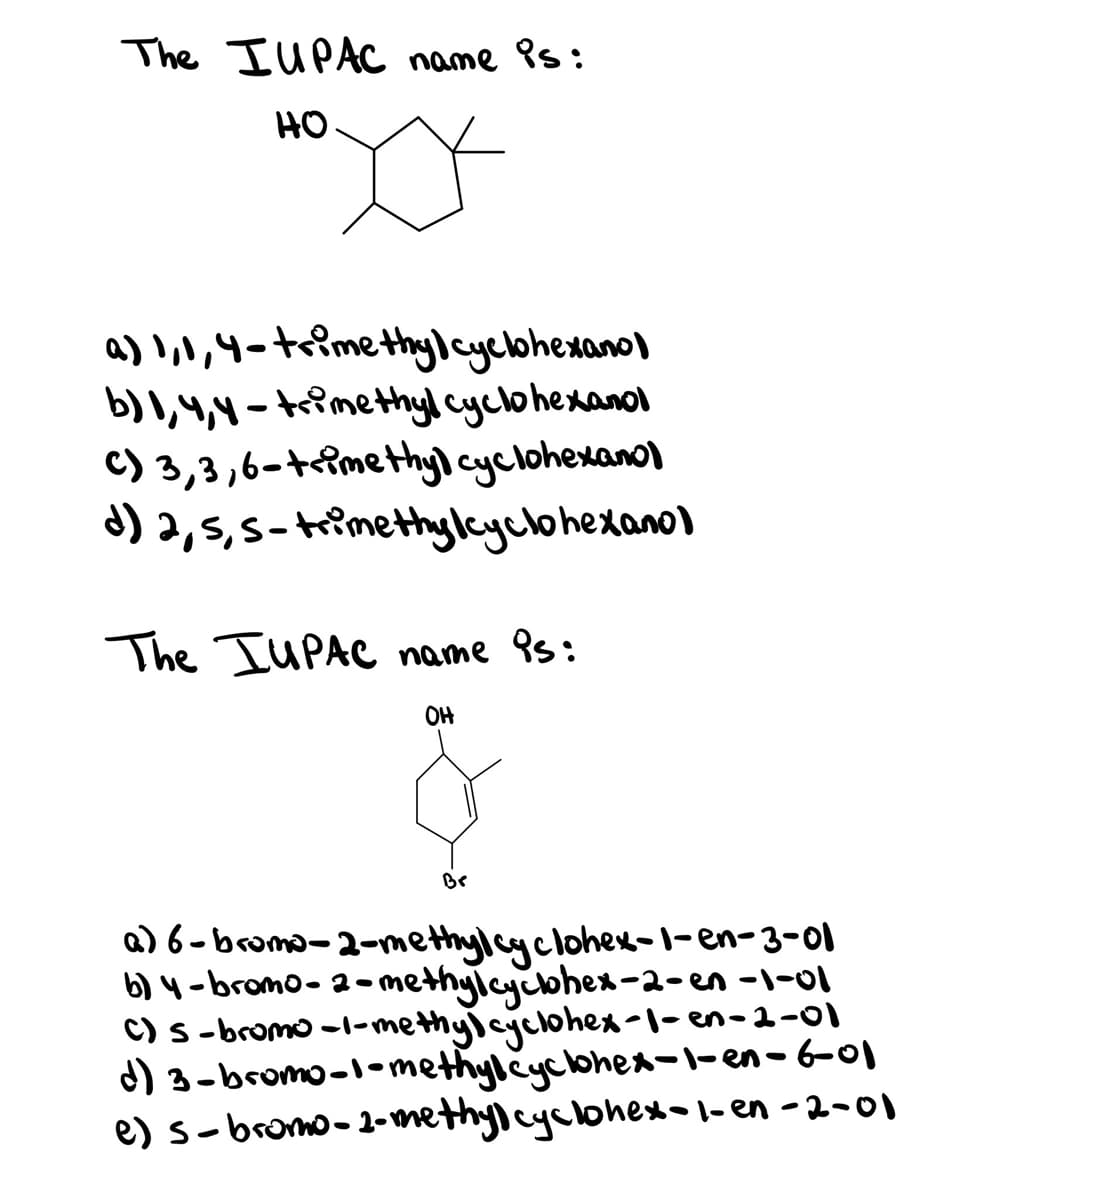 The IUPAC name is:
HO
a) l,,4-trimethylcyclohexano)
b) I,4,4 - trimethyl cyclohexanol
C) 3,3,6-te?methyl cyclohexano)
d) 2,5,5-trimethylayclohexano)
The IUPAC name 9s:
OH
Br
a) 6-bromo-2-methylcyclohew-1-en-3-01
b) 4 -bromo- a- methylycohen-2-en -\-0l
C) S-bromo -1-methyicgclohex-l- en-2-01
d) 3-bromo-l-methylcyclohex-1-en-6-01
e) s-bromo-2-methylcyclohexol- en -2-01
